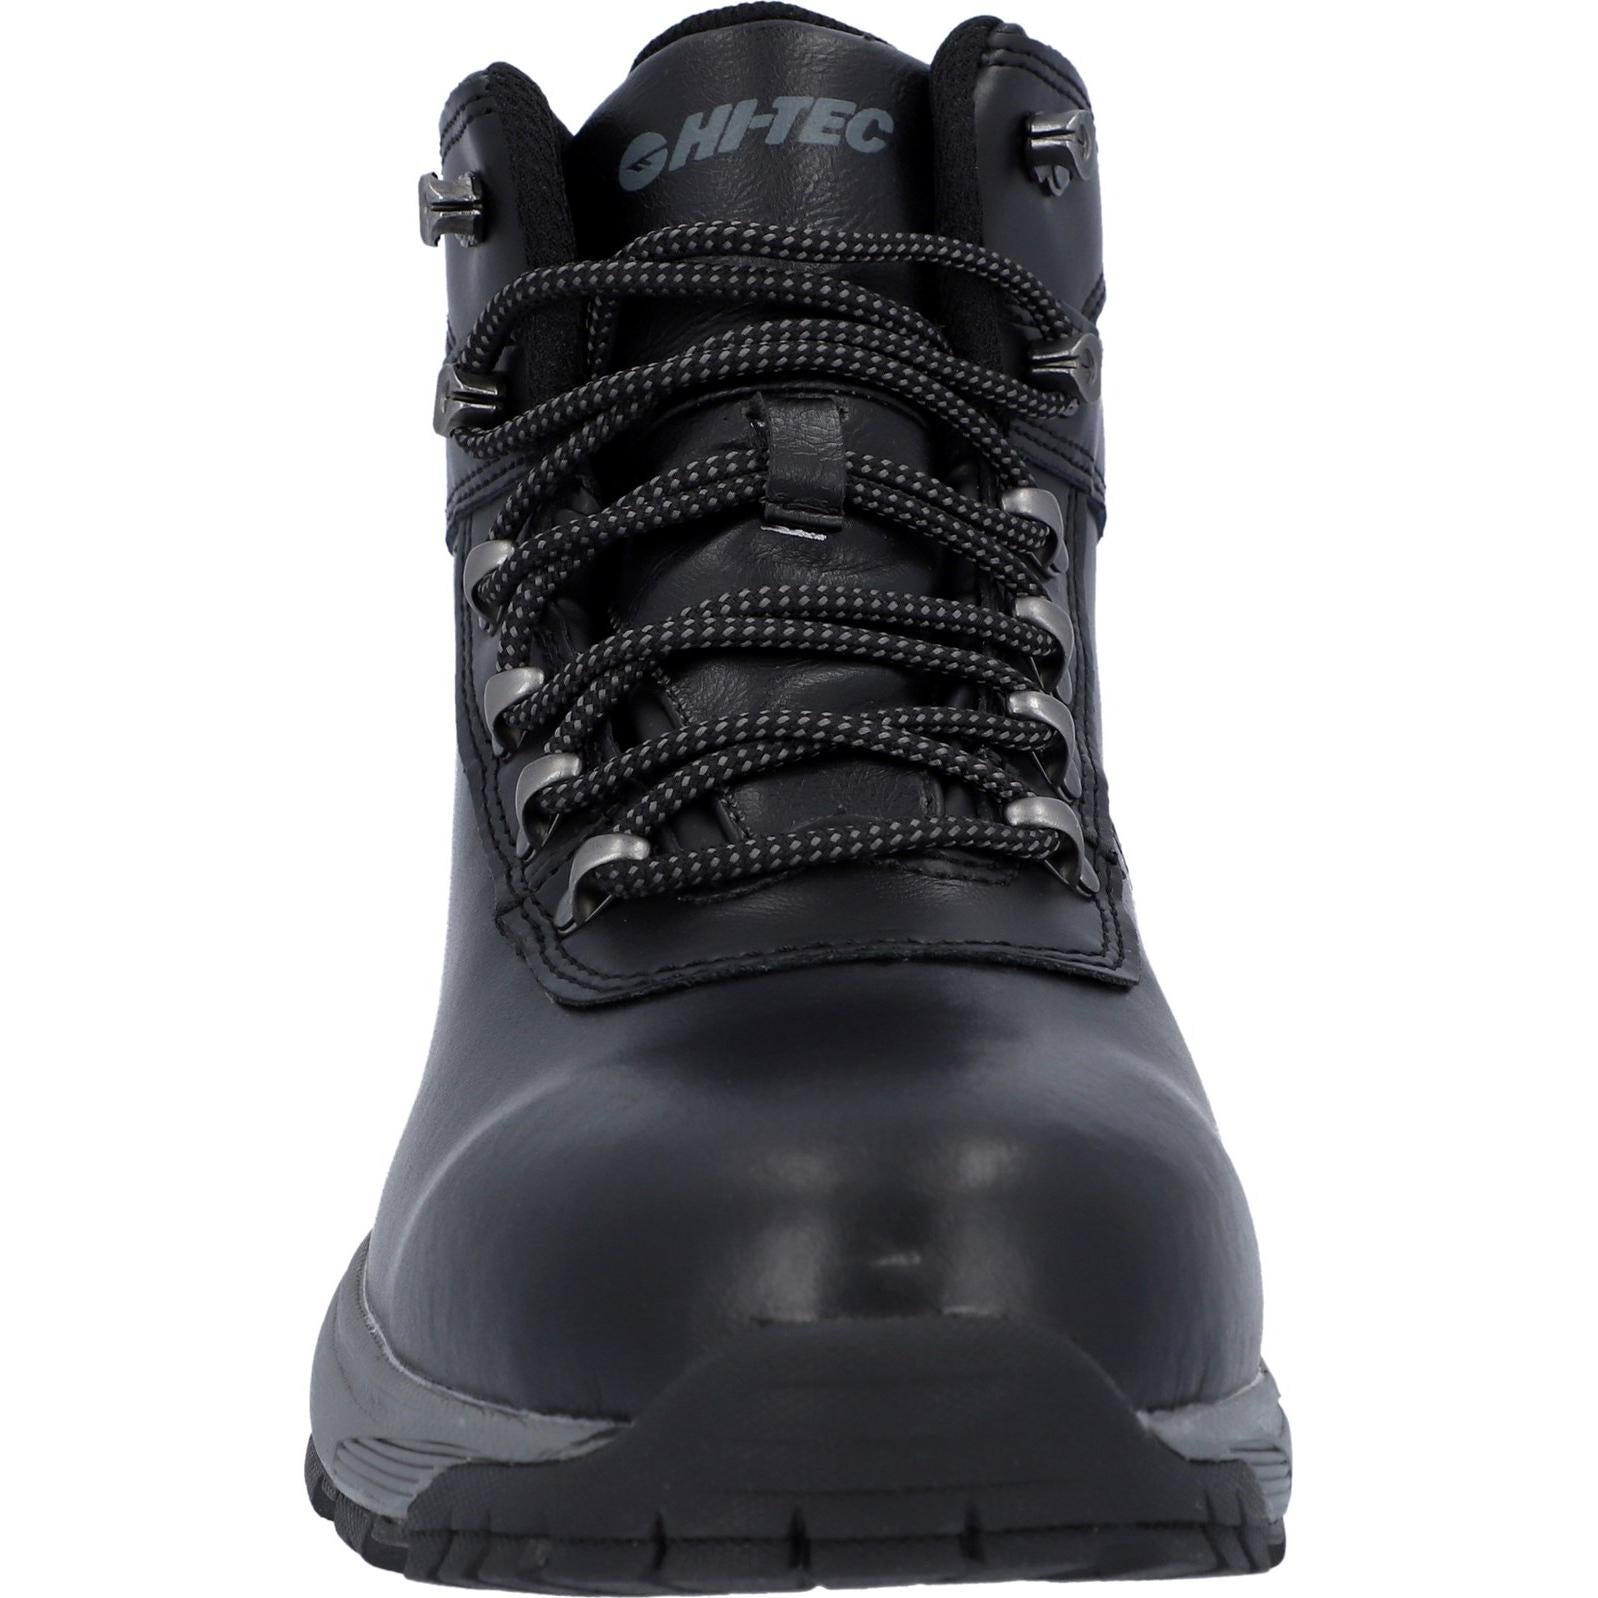 Hi-tec Eurotrek Lite Waterproof Walking Boots